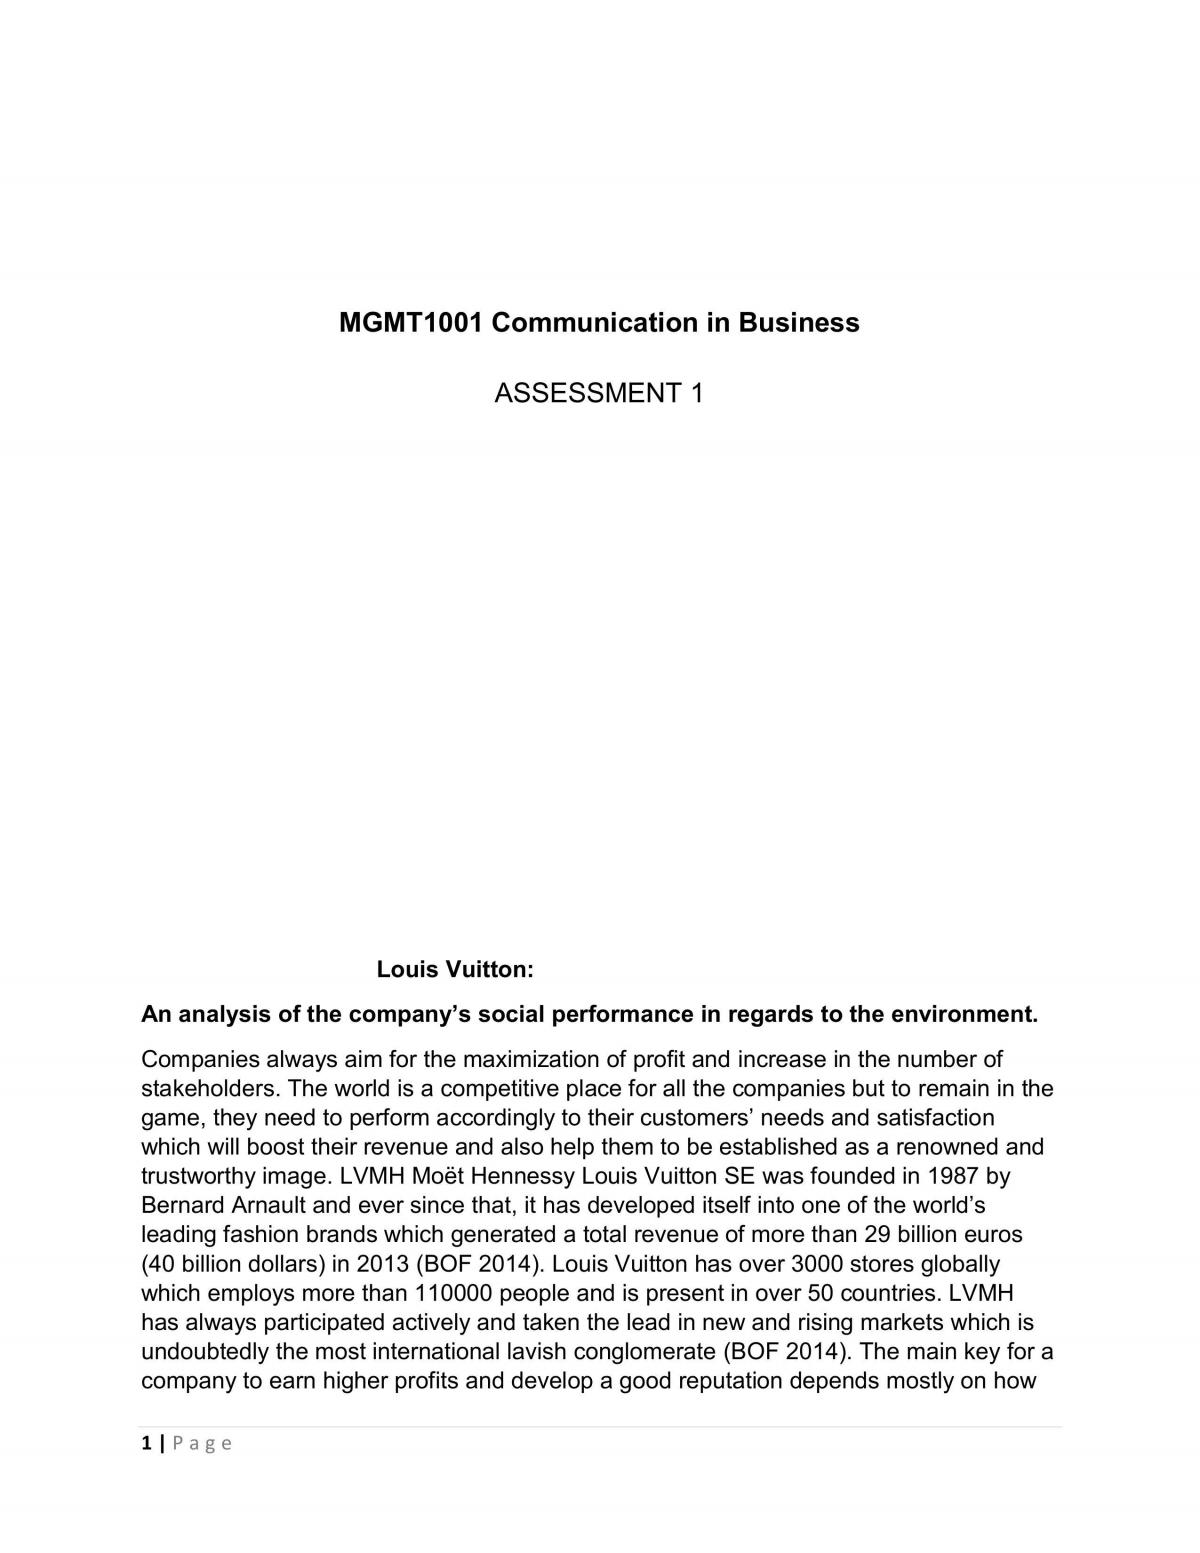 Environmental Analysis of Louis Vuitton Assignment